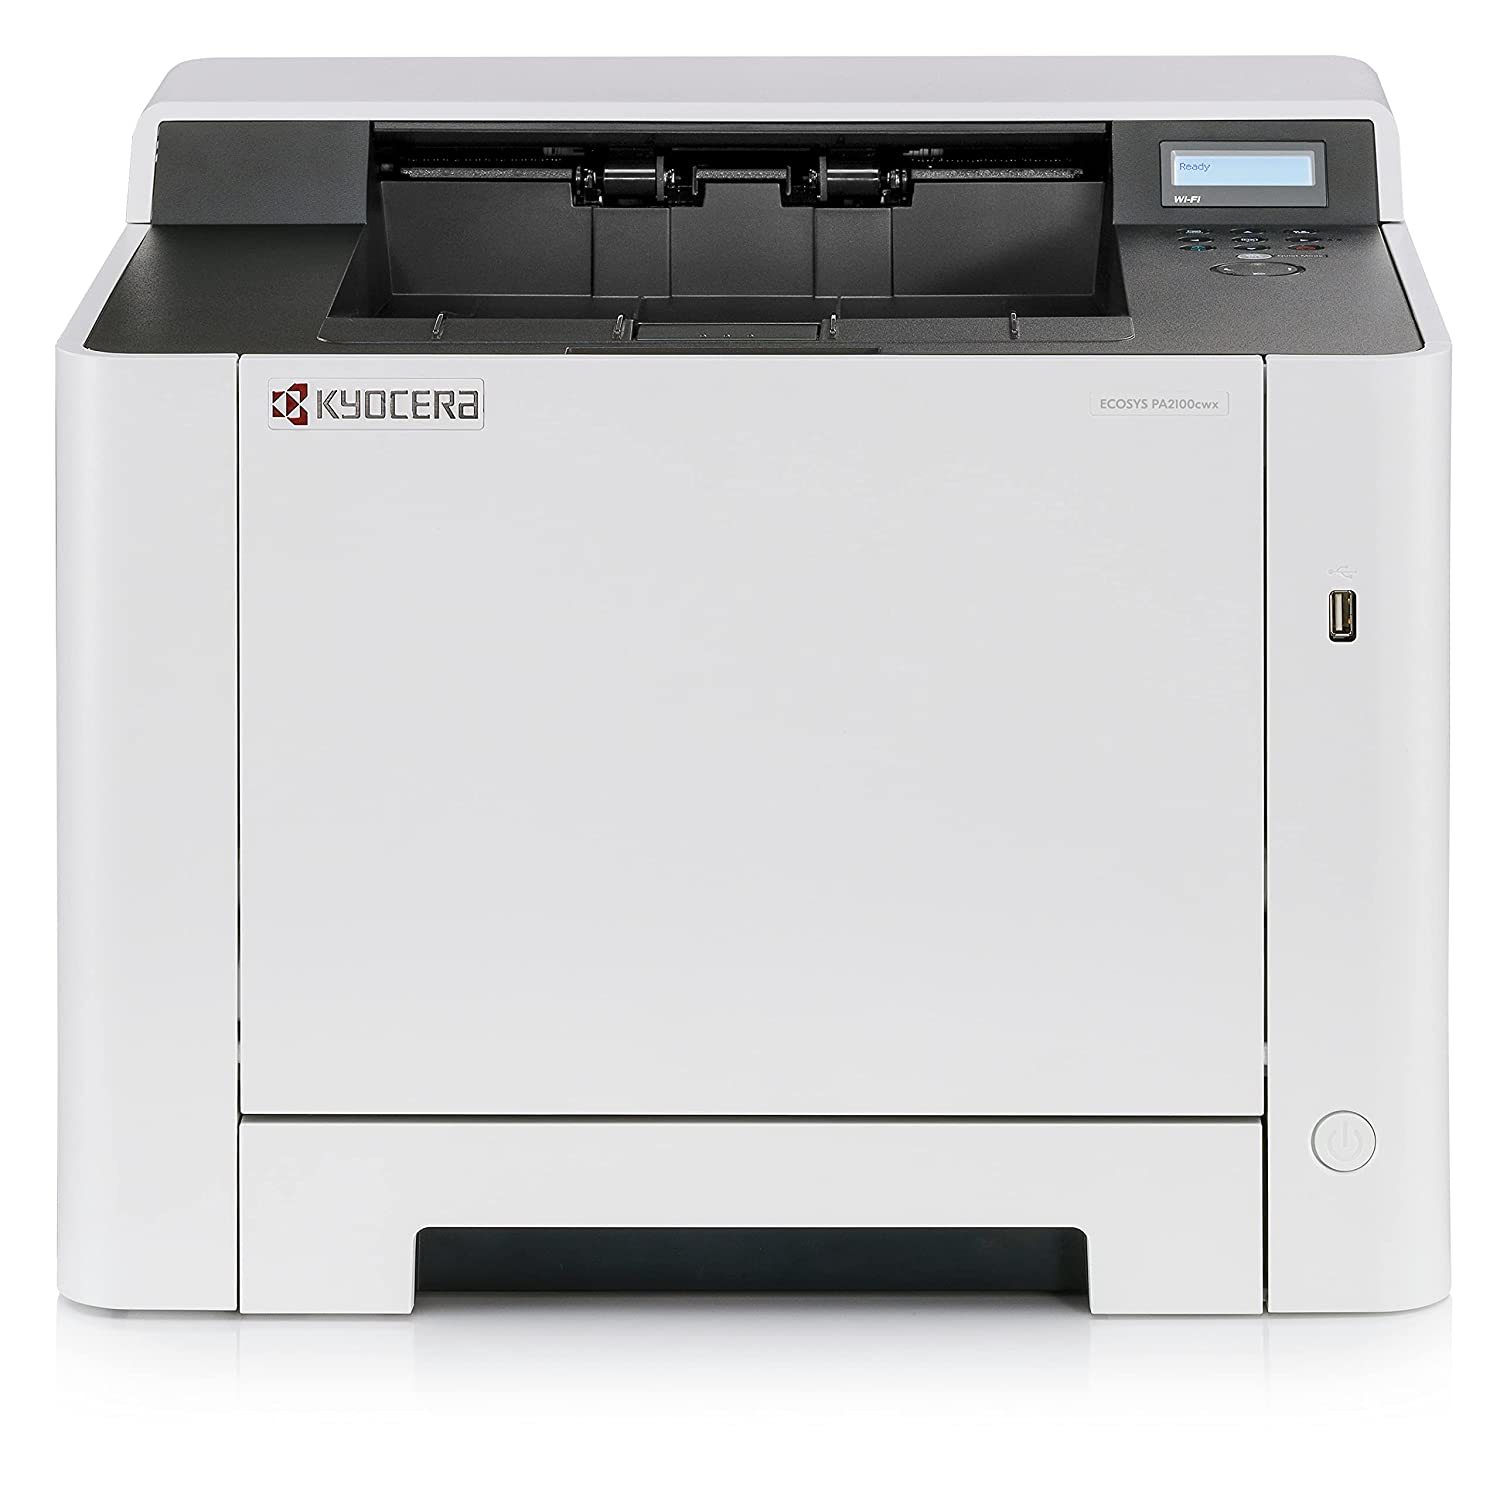 Kyocera ECOSYS PA2100cwx Color Laser Printer up to 22 ppm, Standard 1200dpi, Wir - $541.99